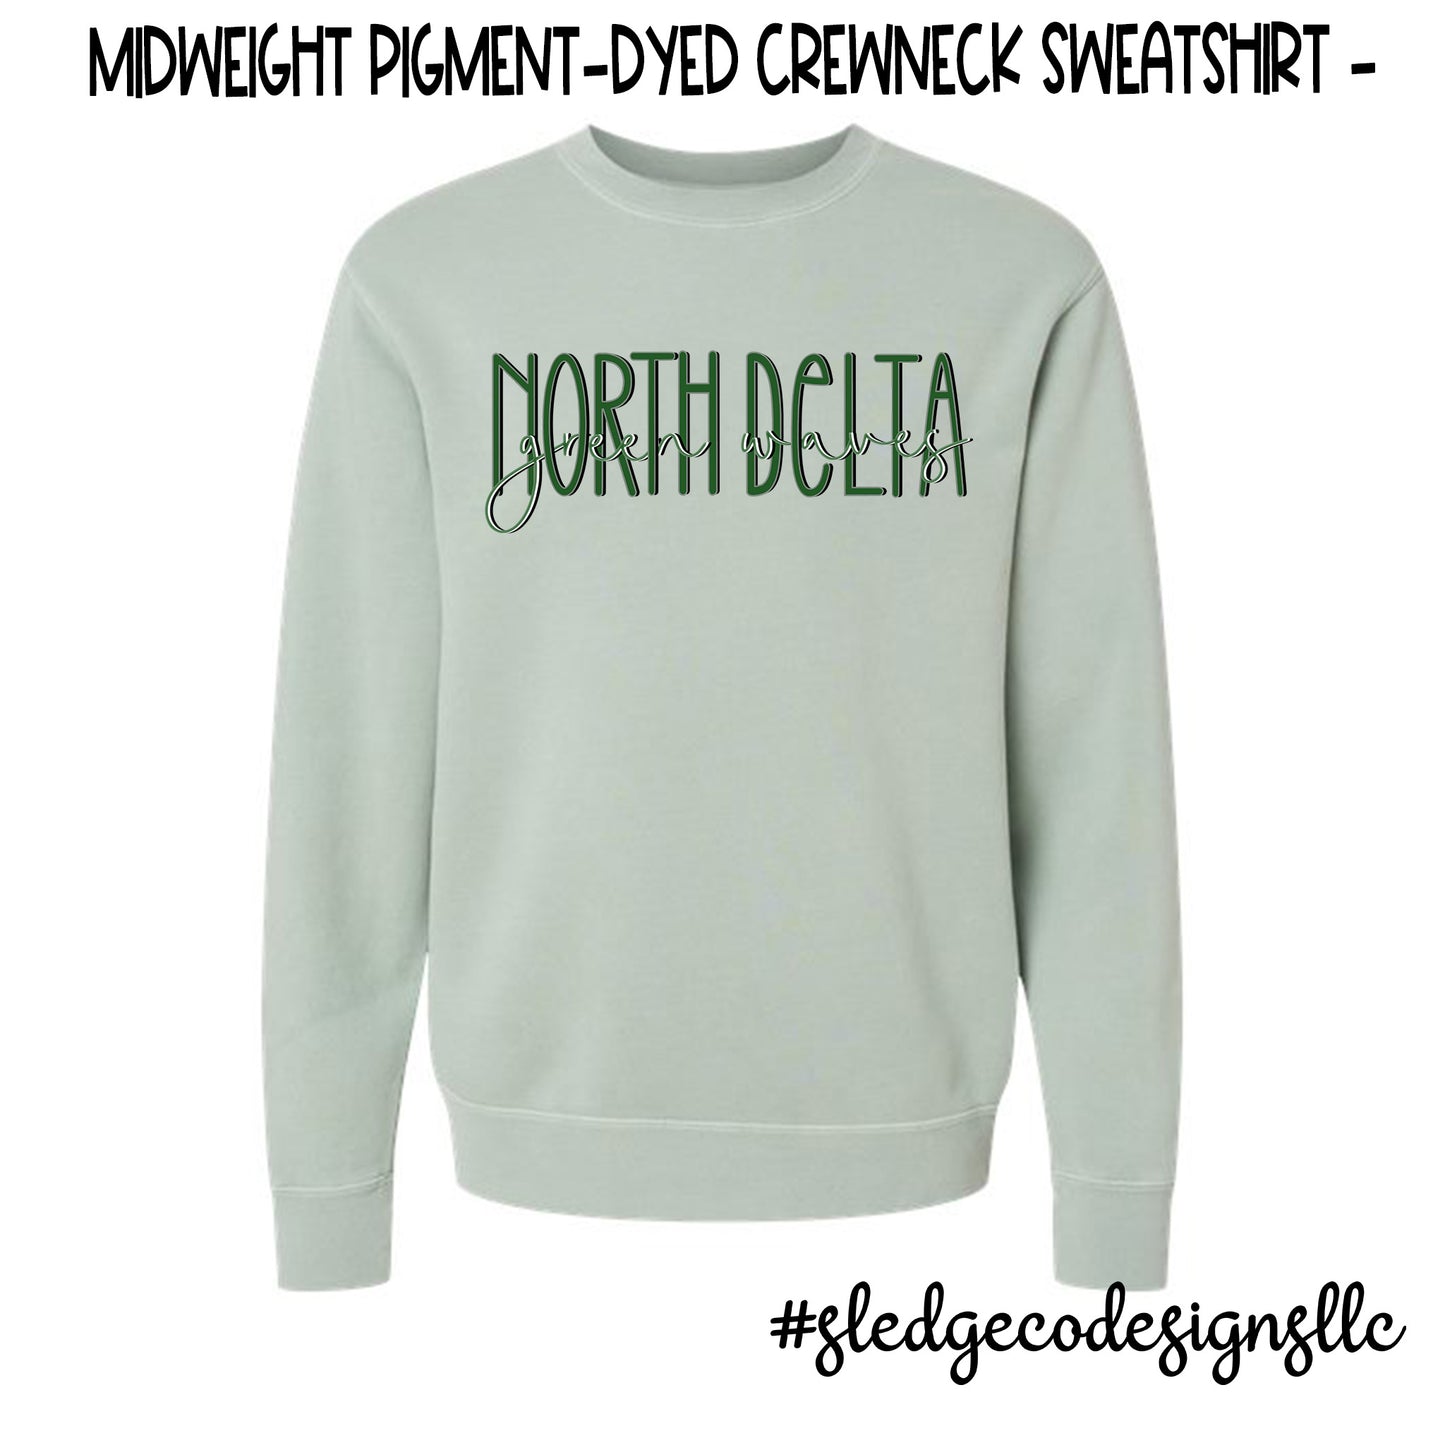 NORTH DELTA GREEN WAVES DUO | Midweight Pigment-Dyed Crewneck Sweatshirt